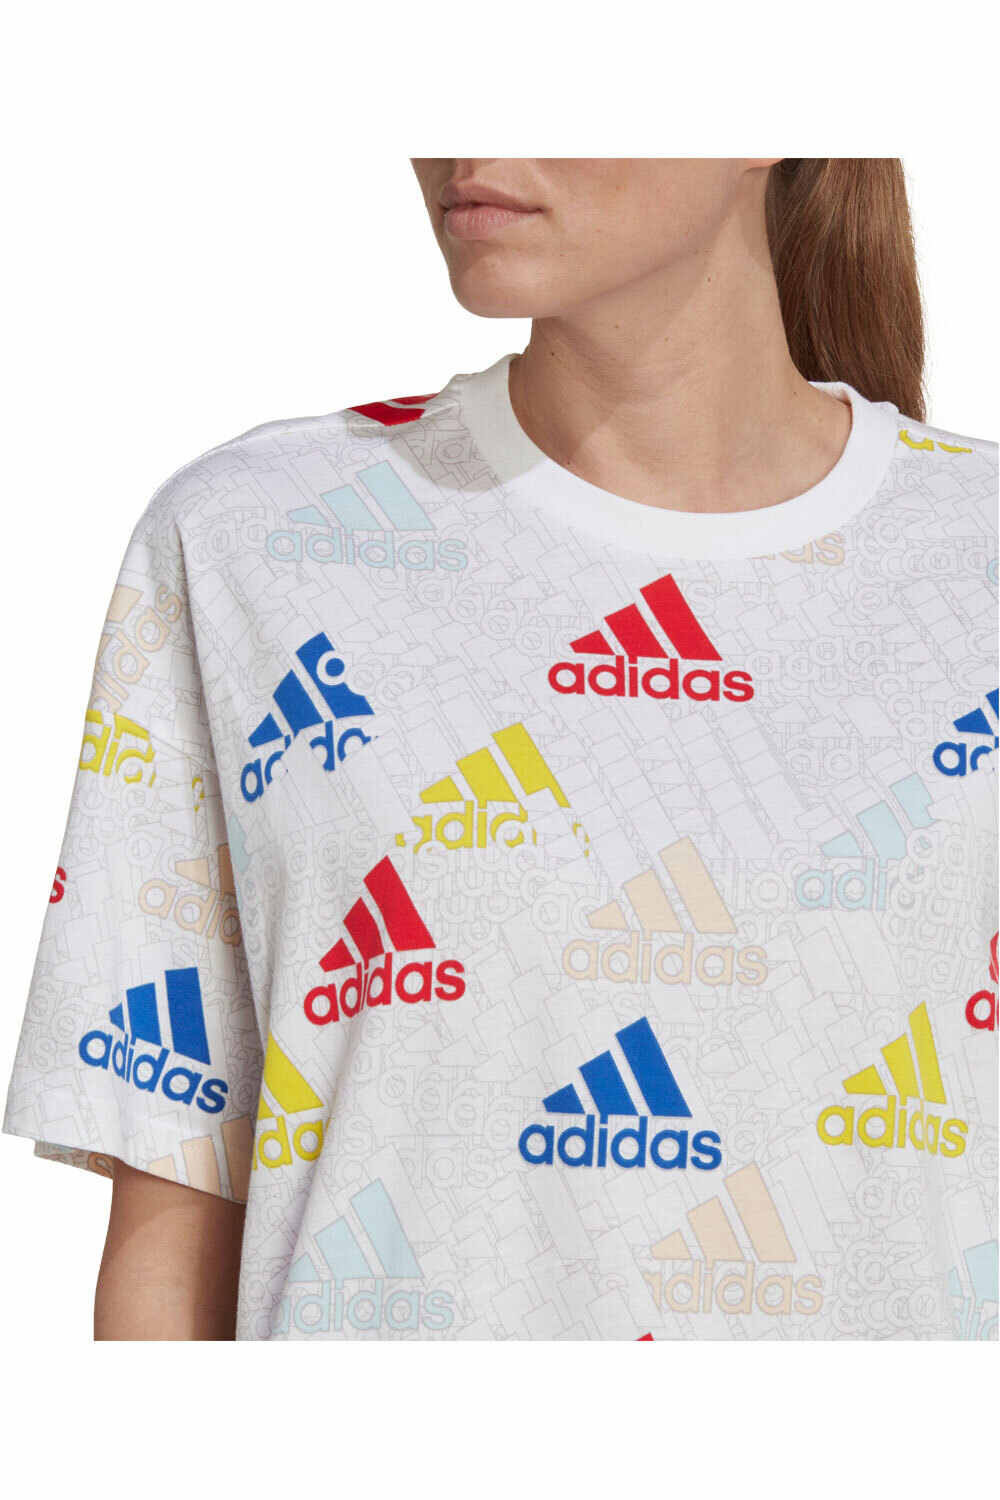 adidas camiseta manga corta mujer Essentials Multi-Colored Logo Boyfriend vista detalle